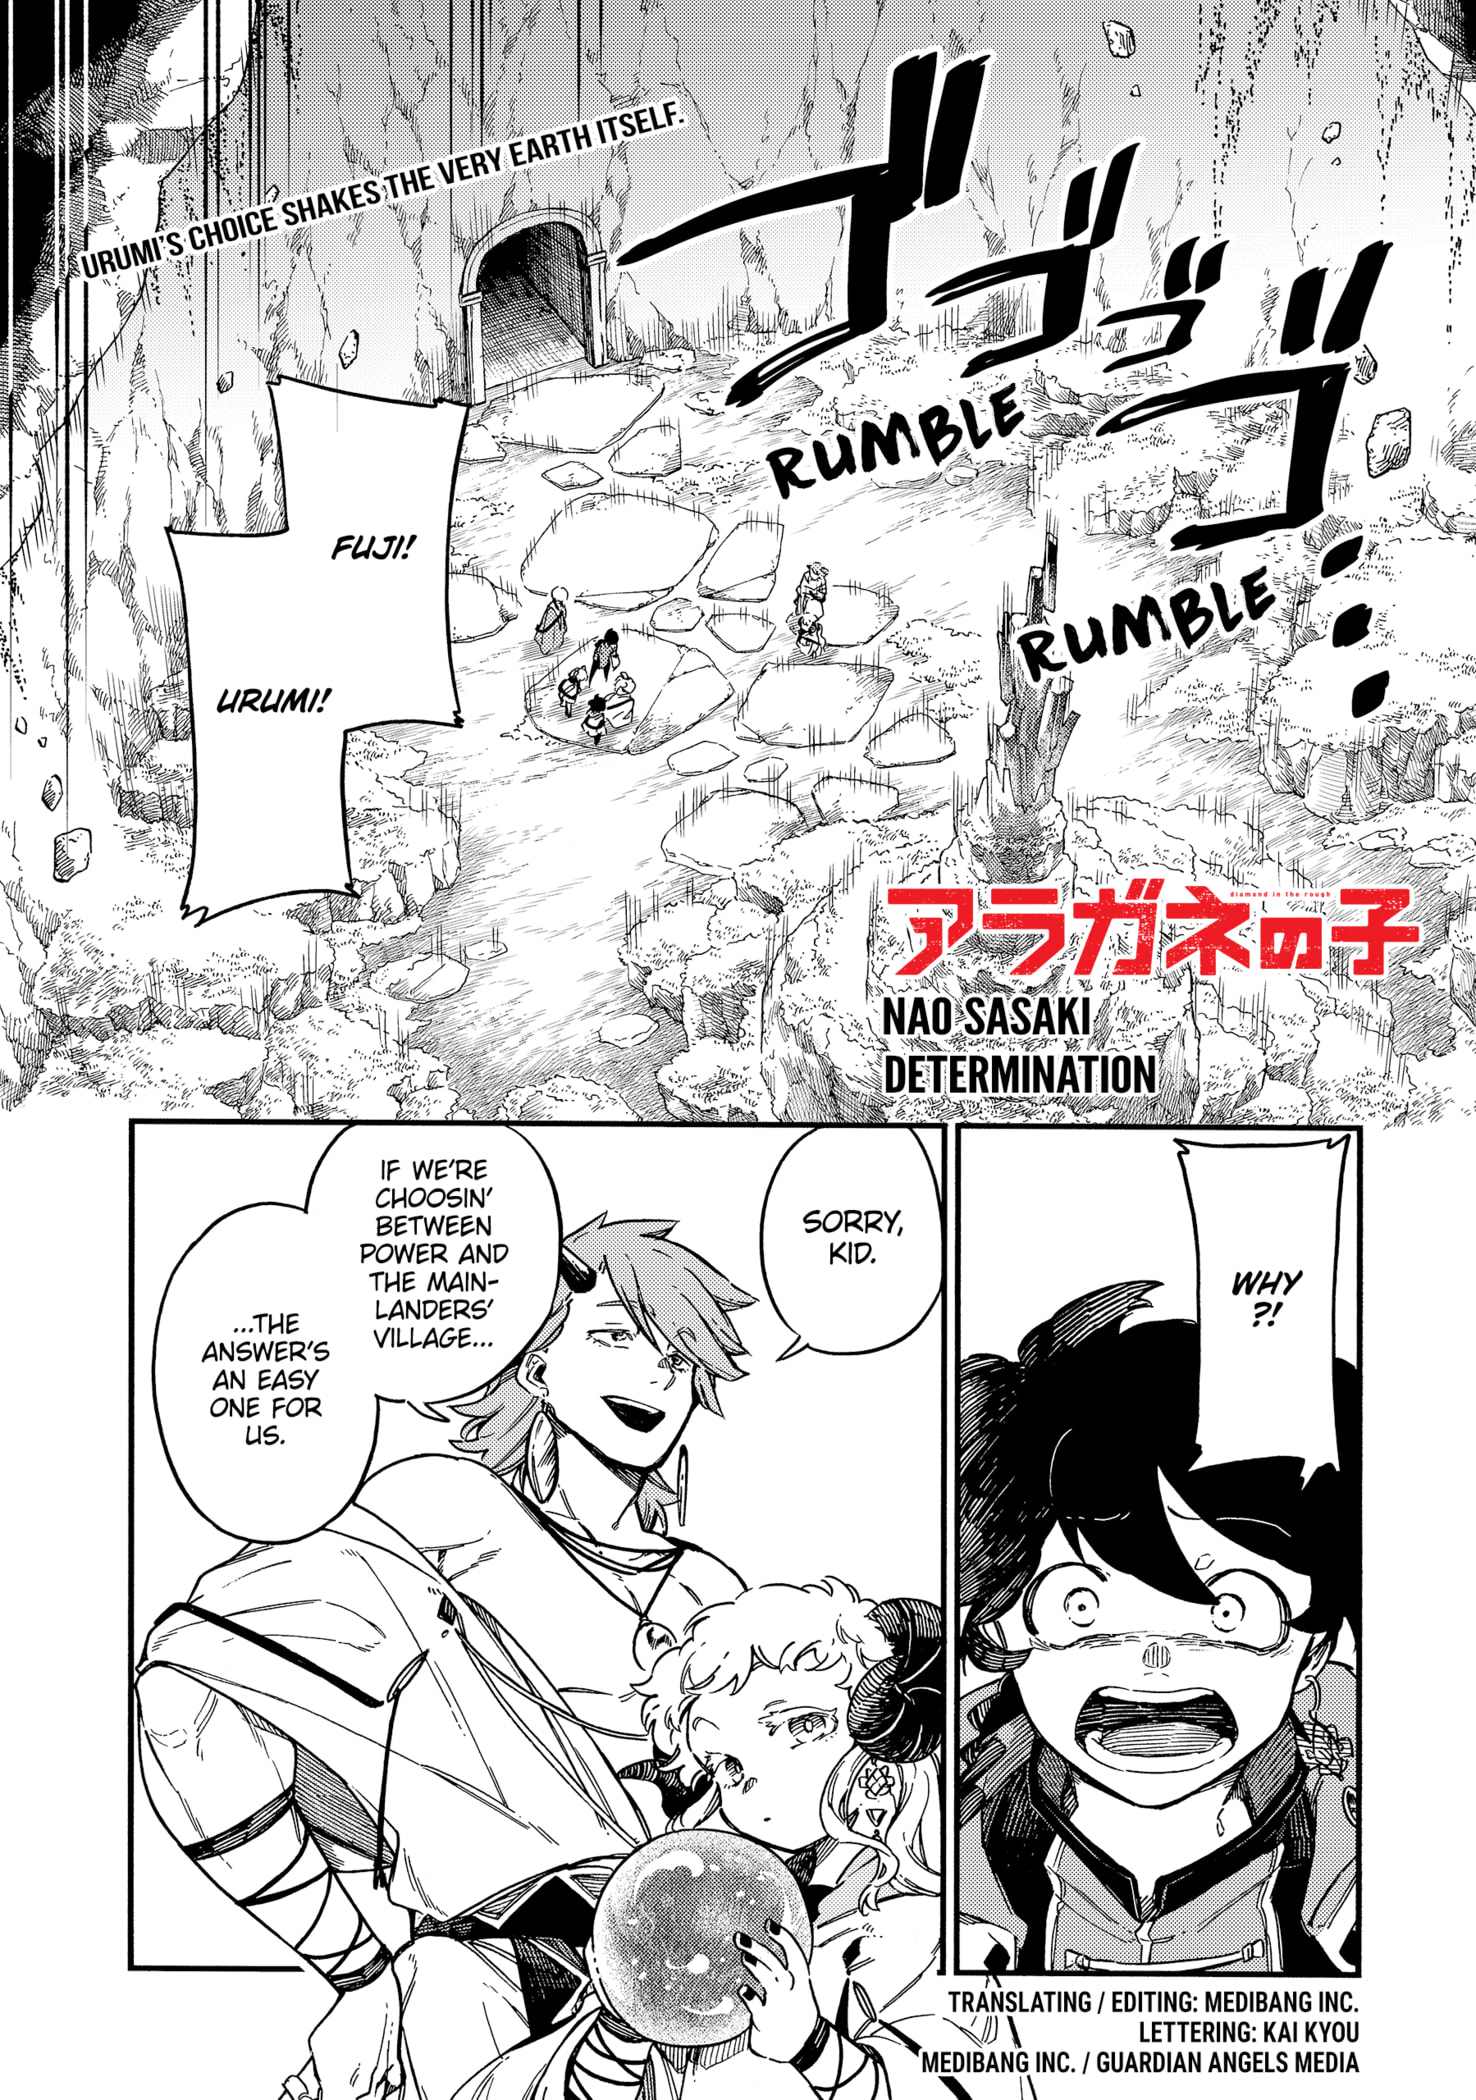 Aragane No Ko - Page 1